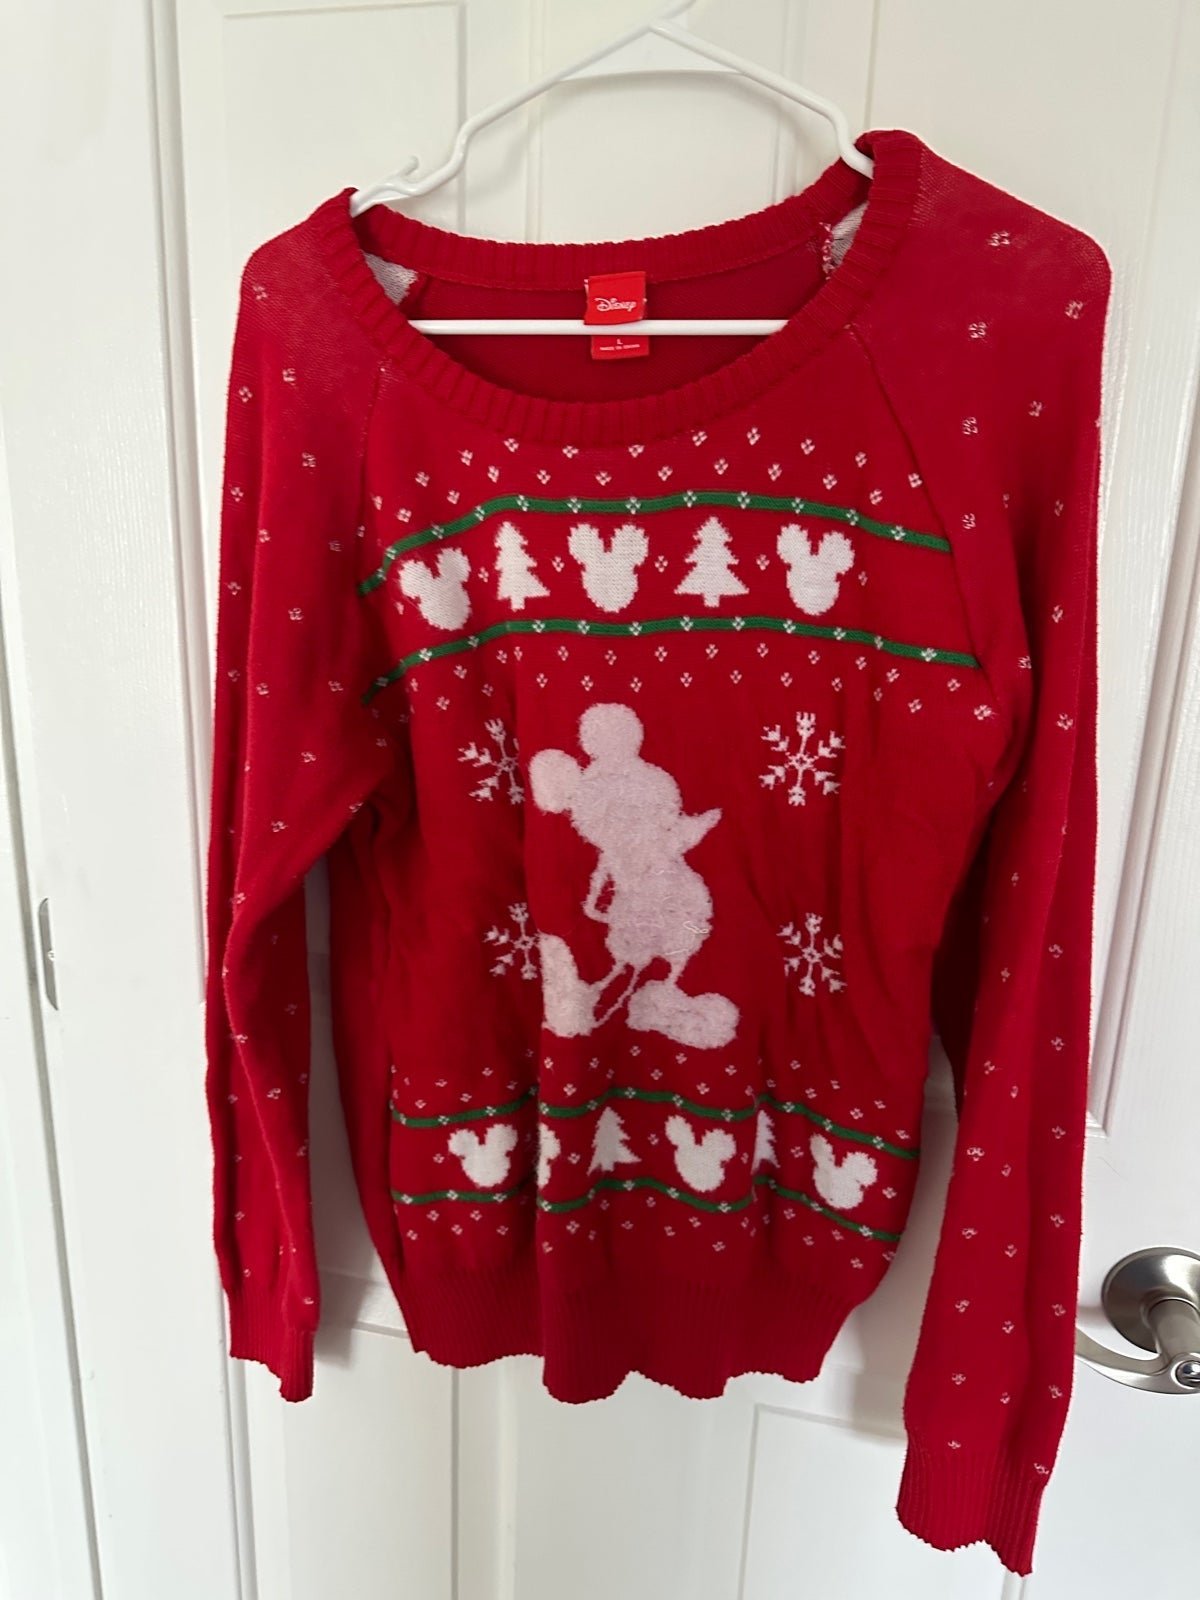 The Best Seller Disney Christmas Sweater i6HmCZsQd best